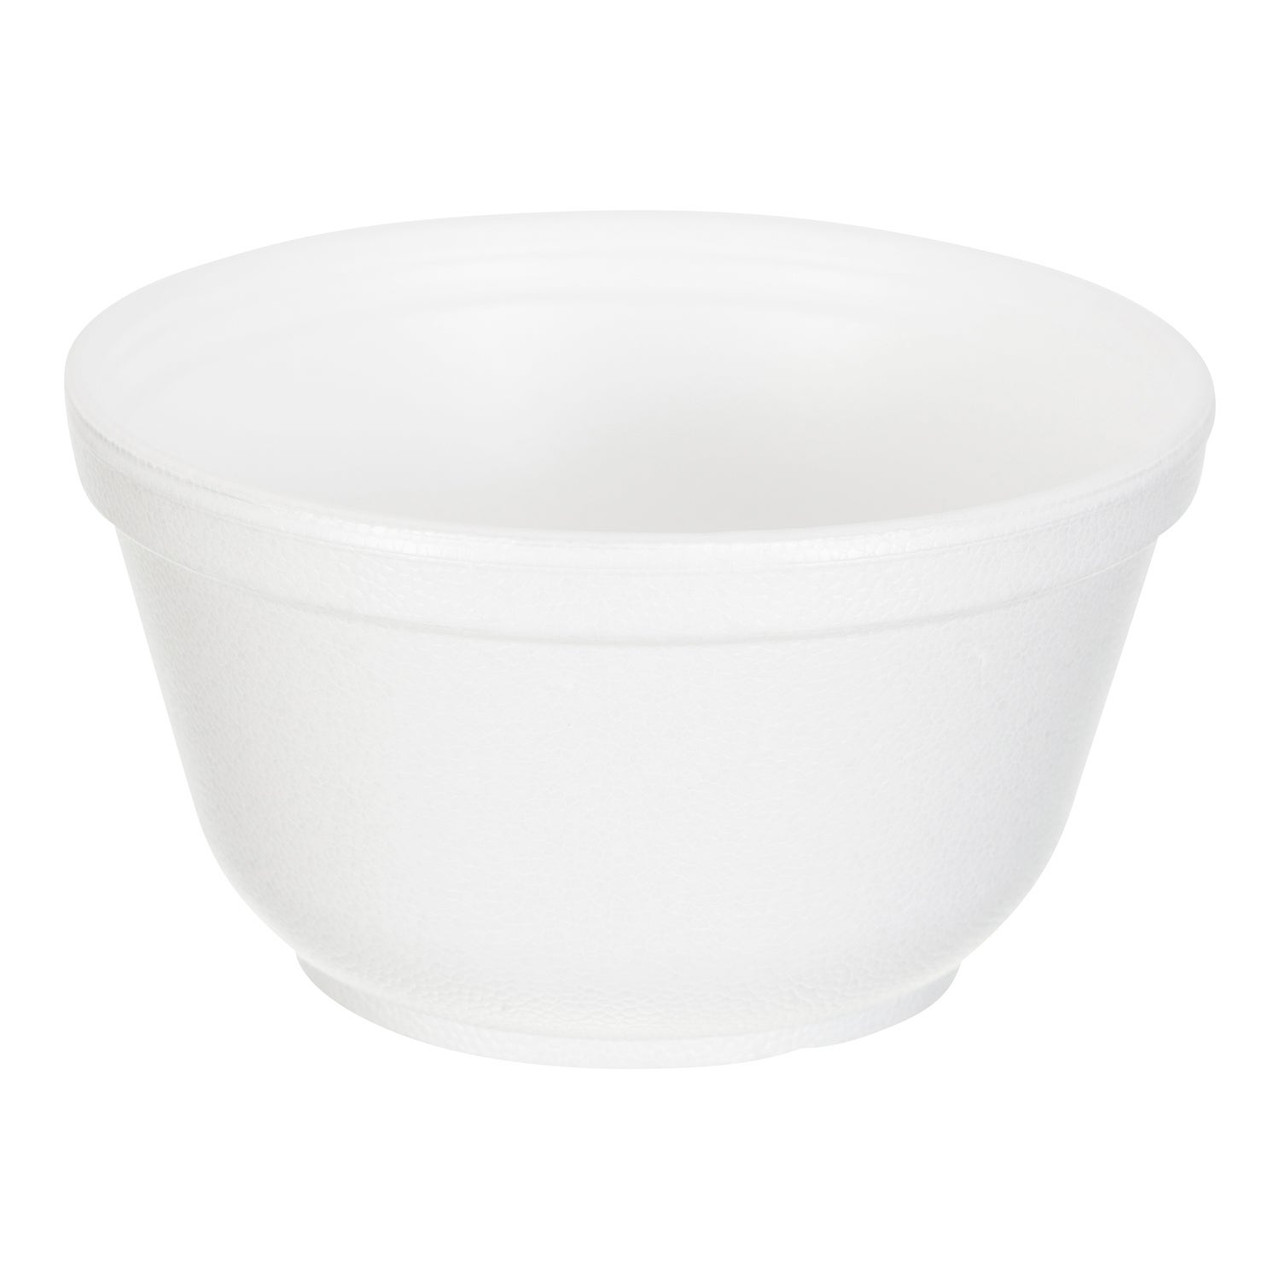 Gordon Choice 10oz White Foam Bowls | 50UN/Unit, 20 Units/Case